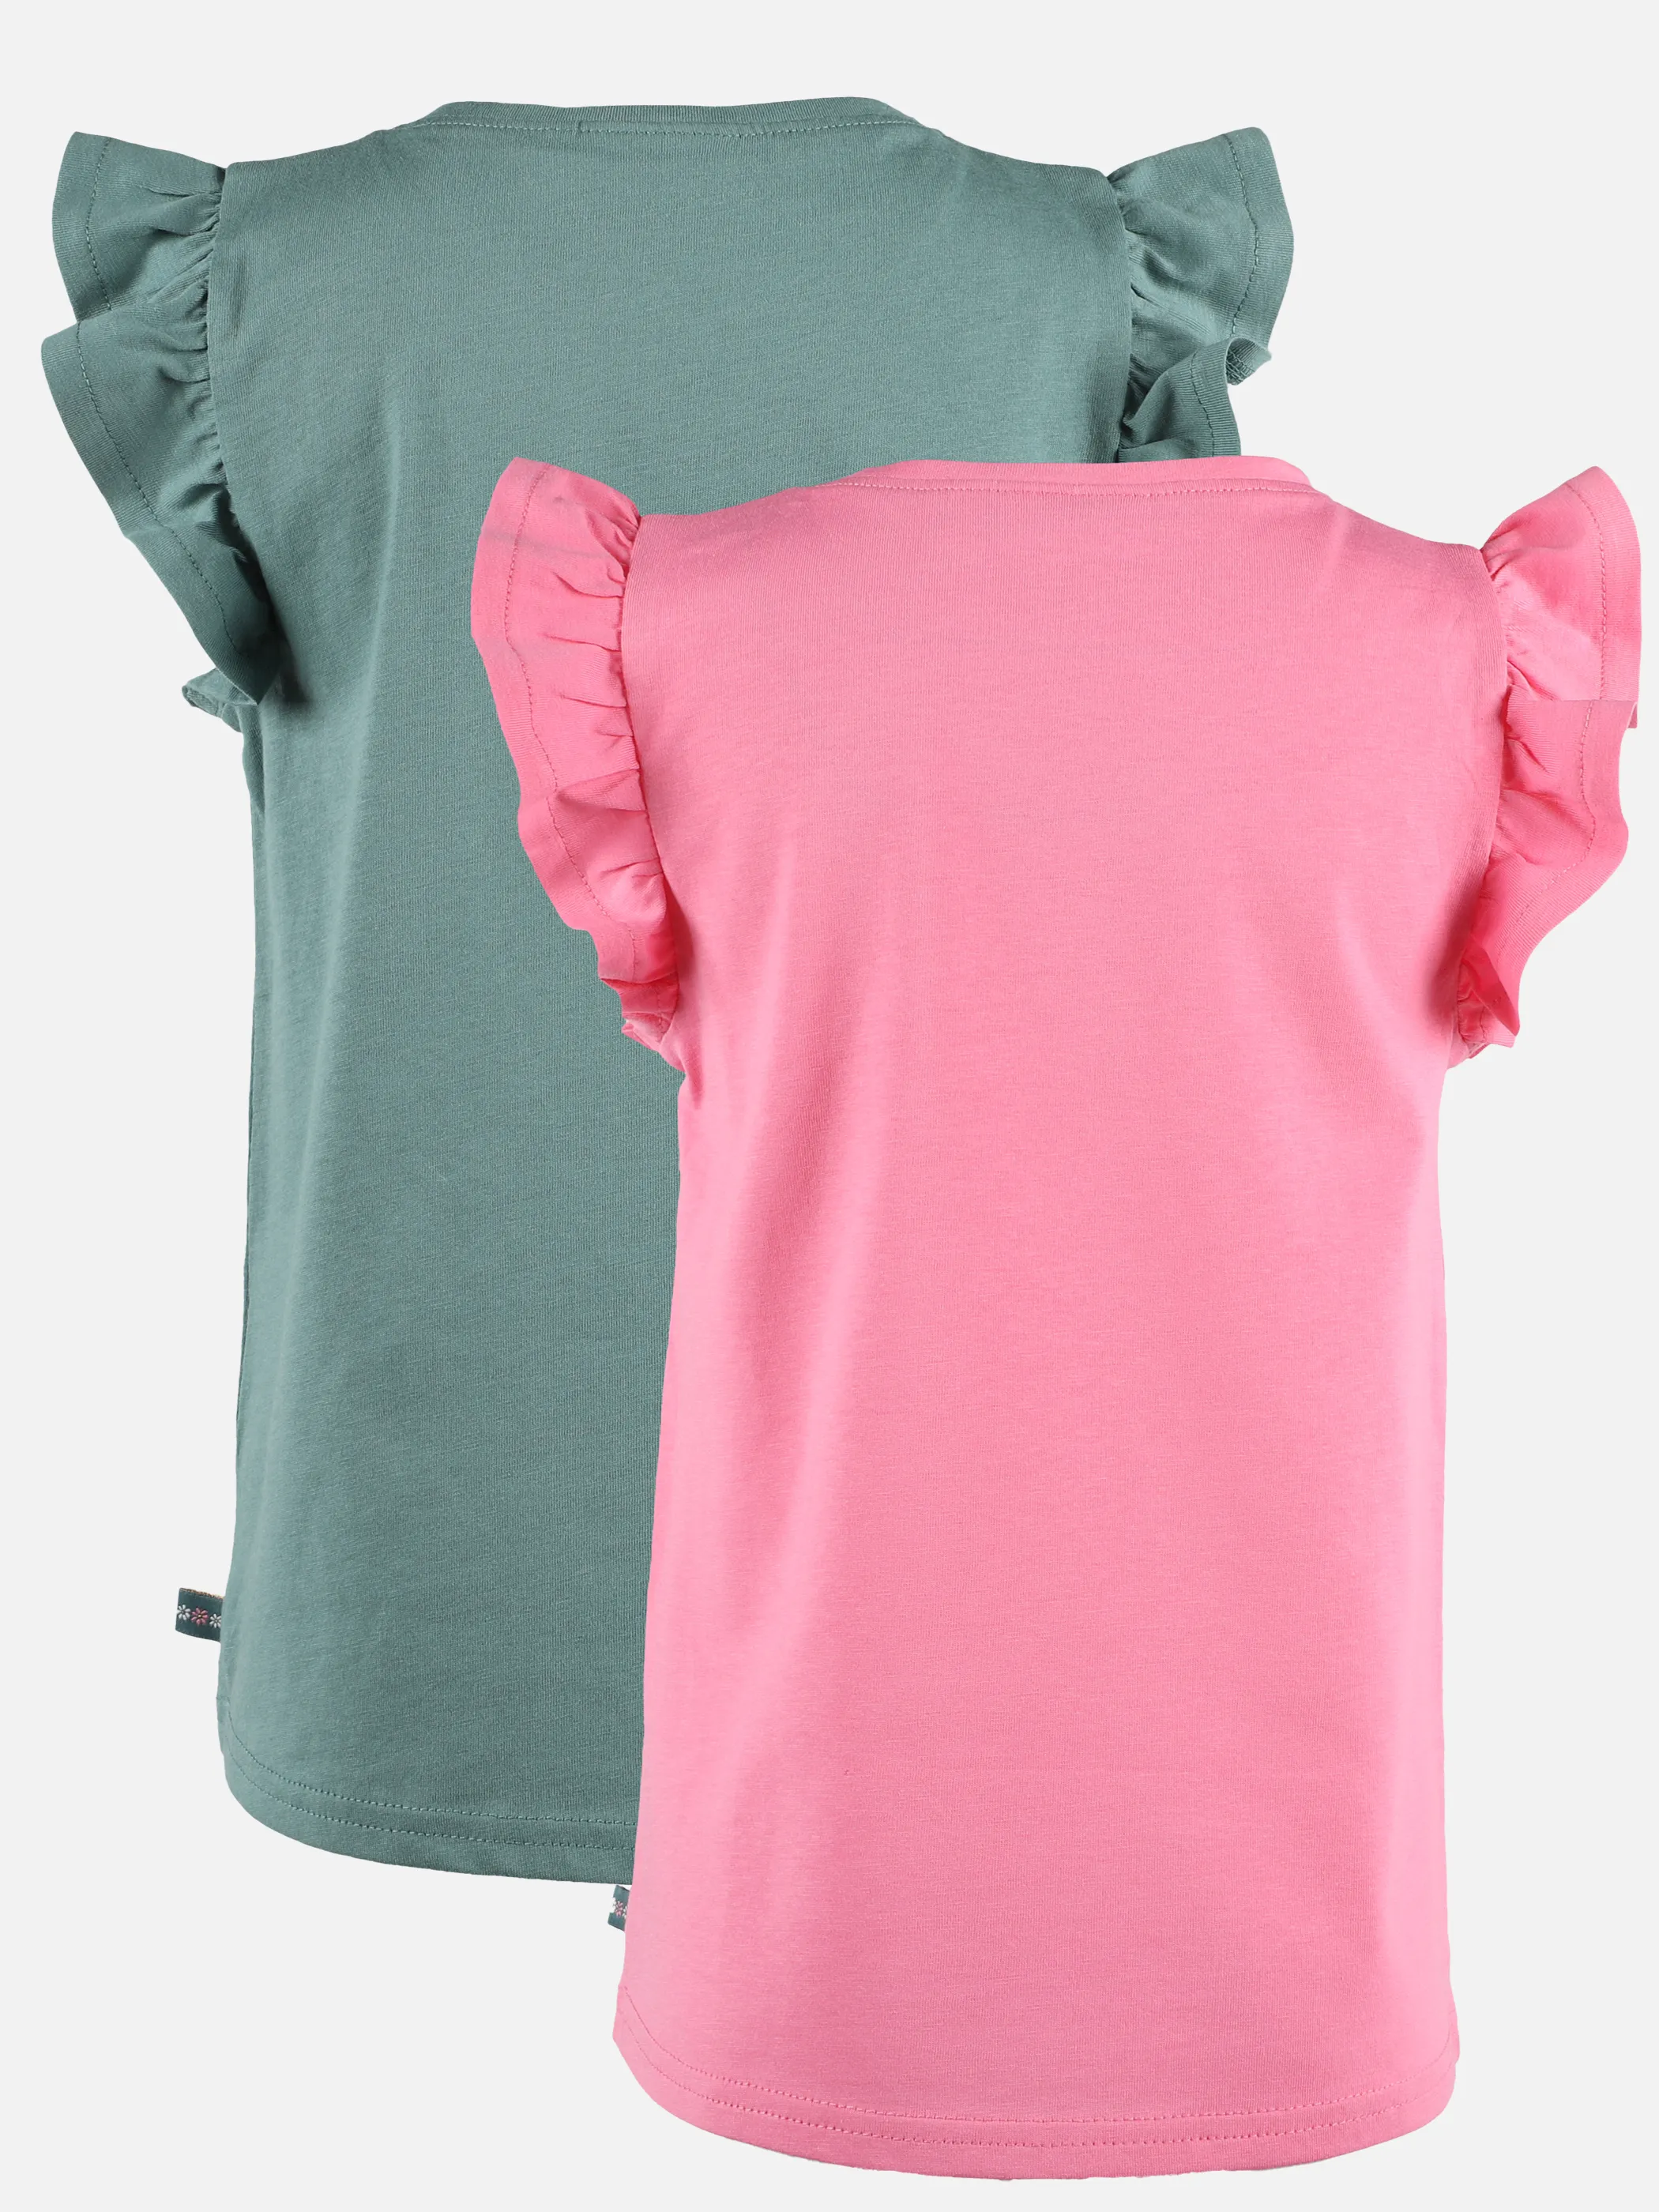 Stop + Go KM 2er Pack T-Shirts uni pink und blau gestreift Rosa 892676 ROSA/BLAU 2